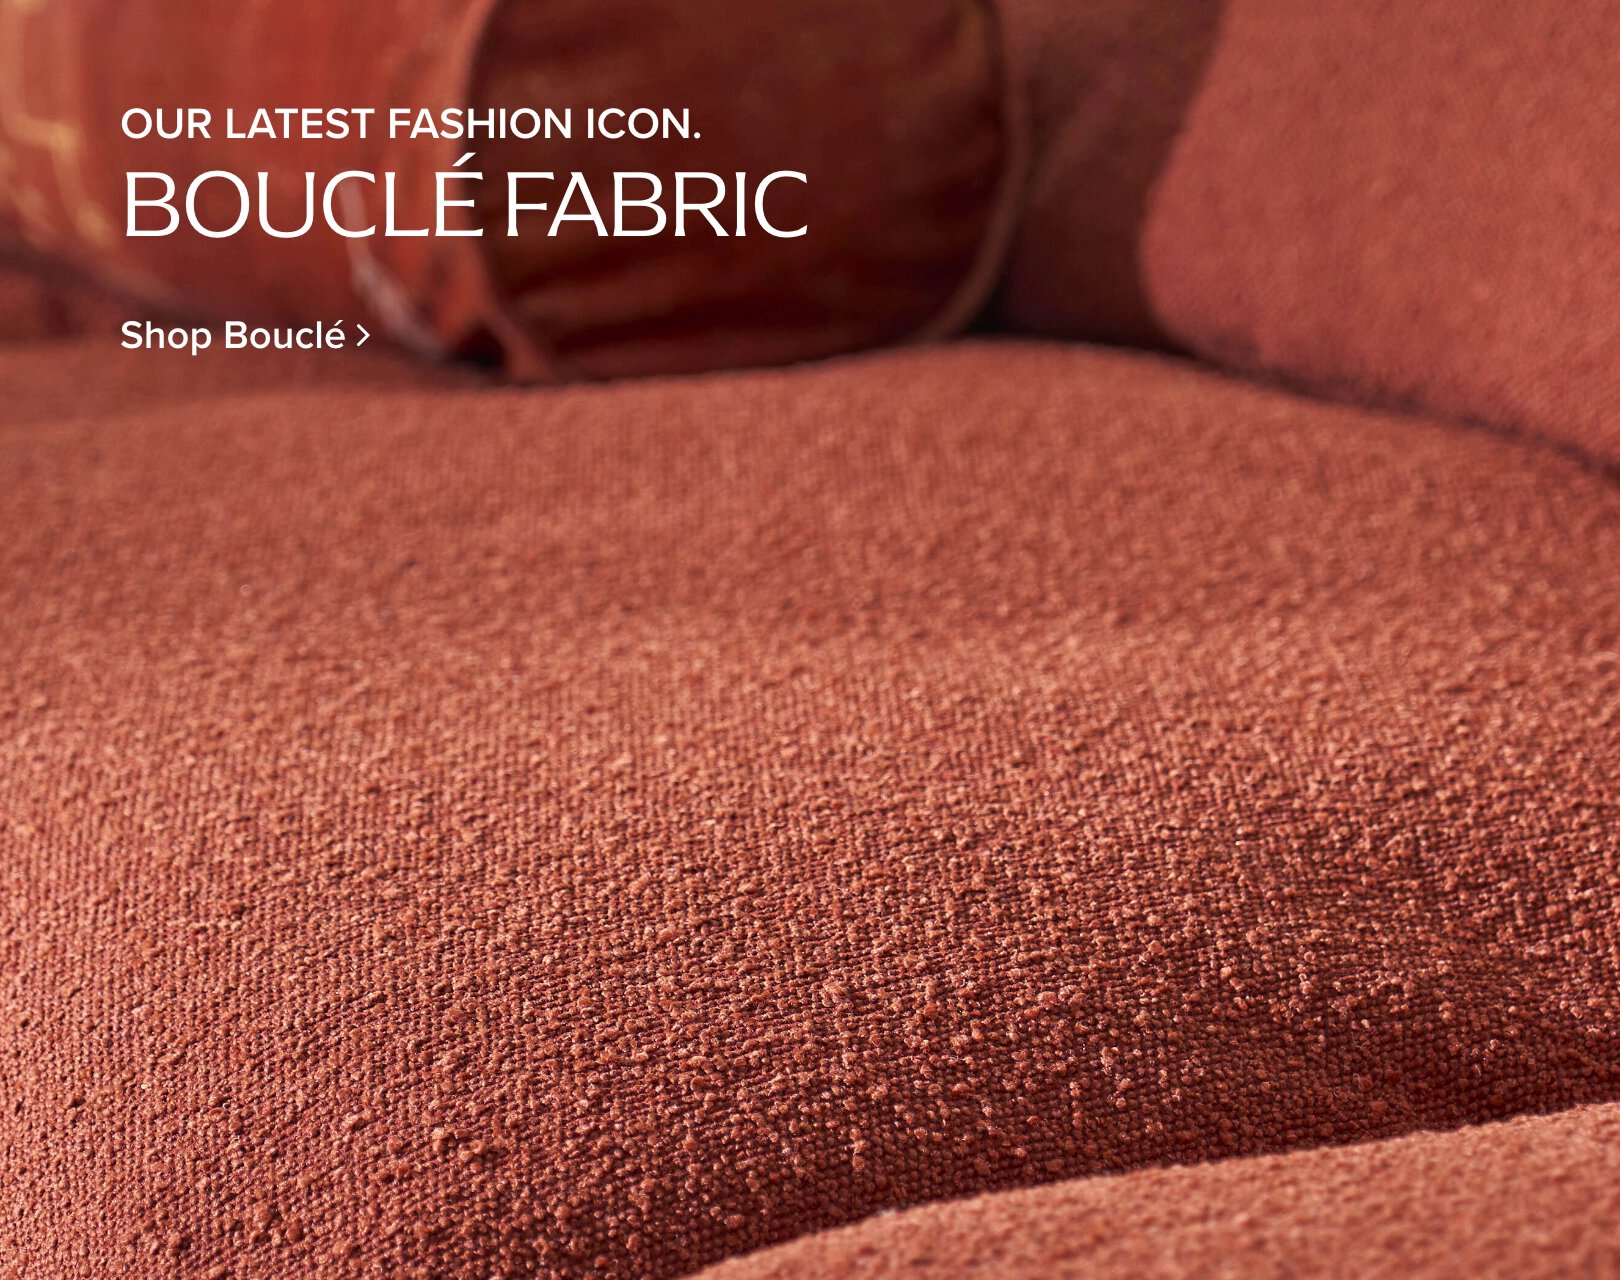 Our latest fashion icon Bouclé fabric